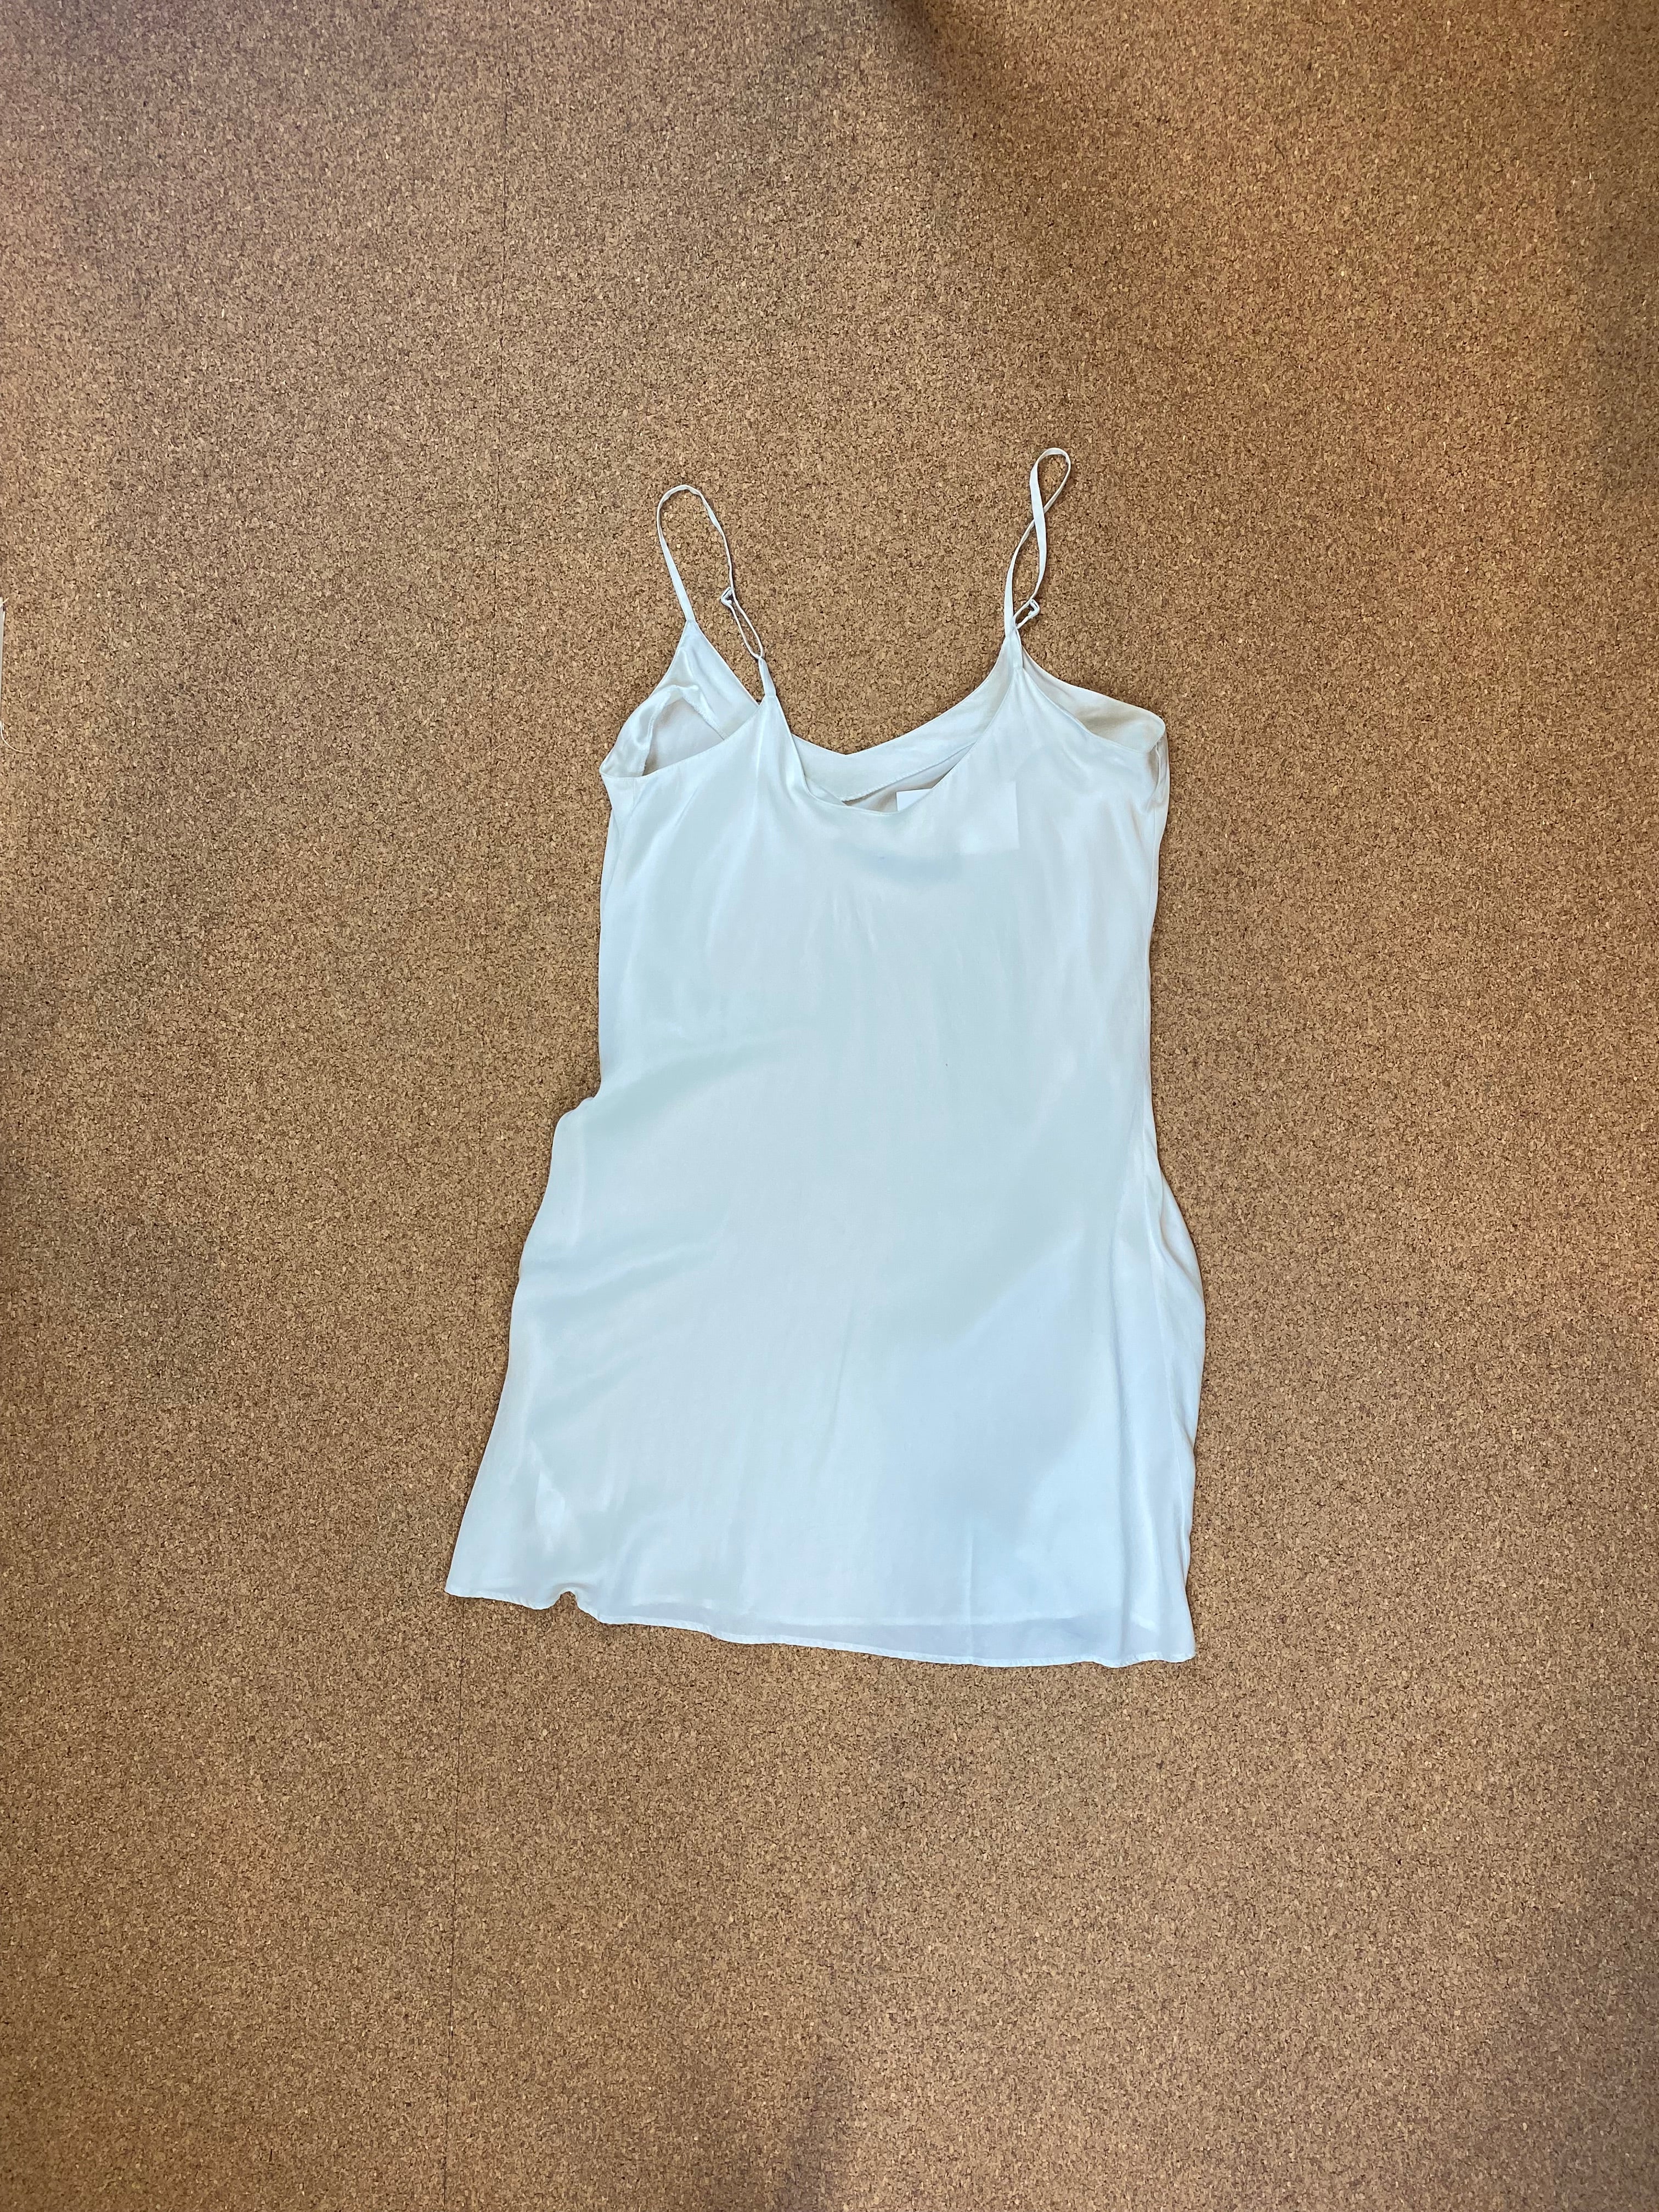 White silk slip dress size M